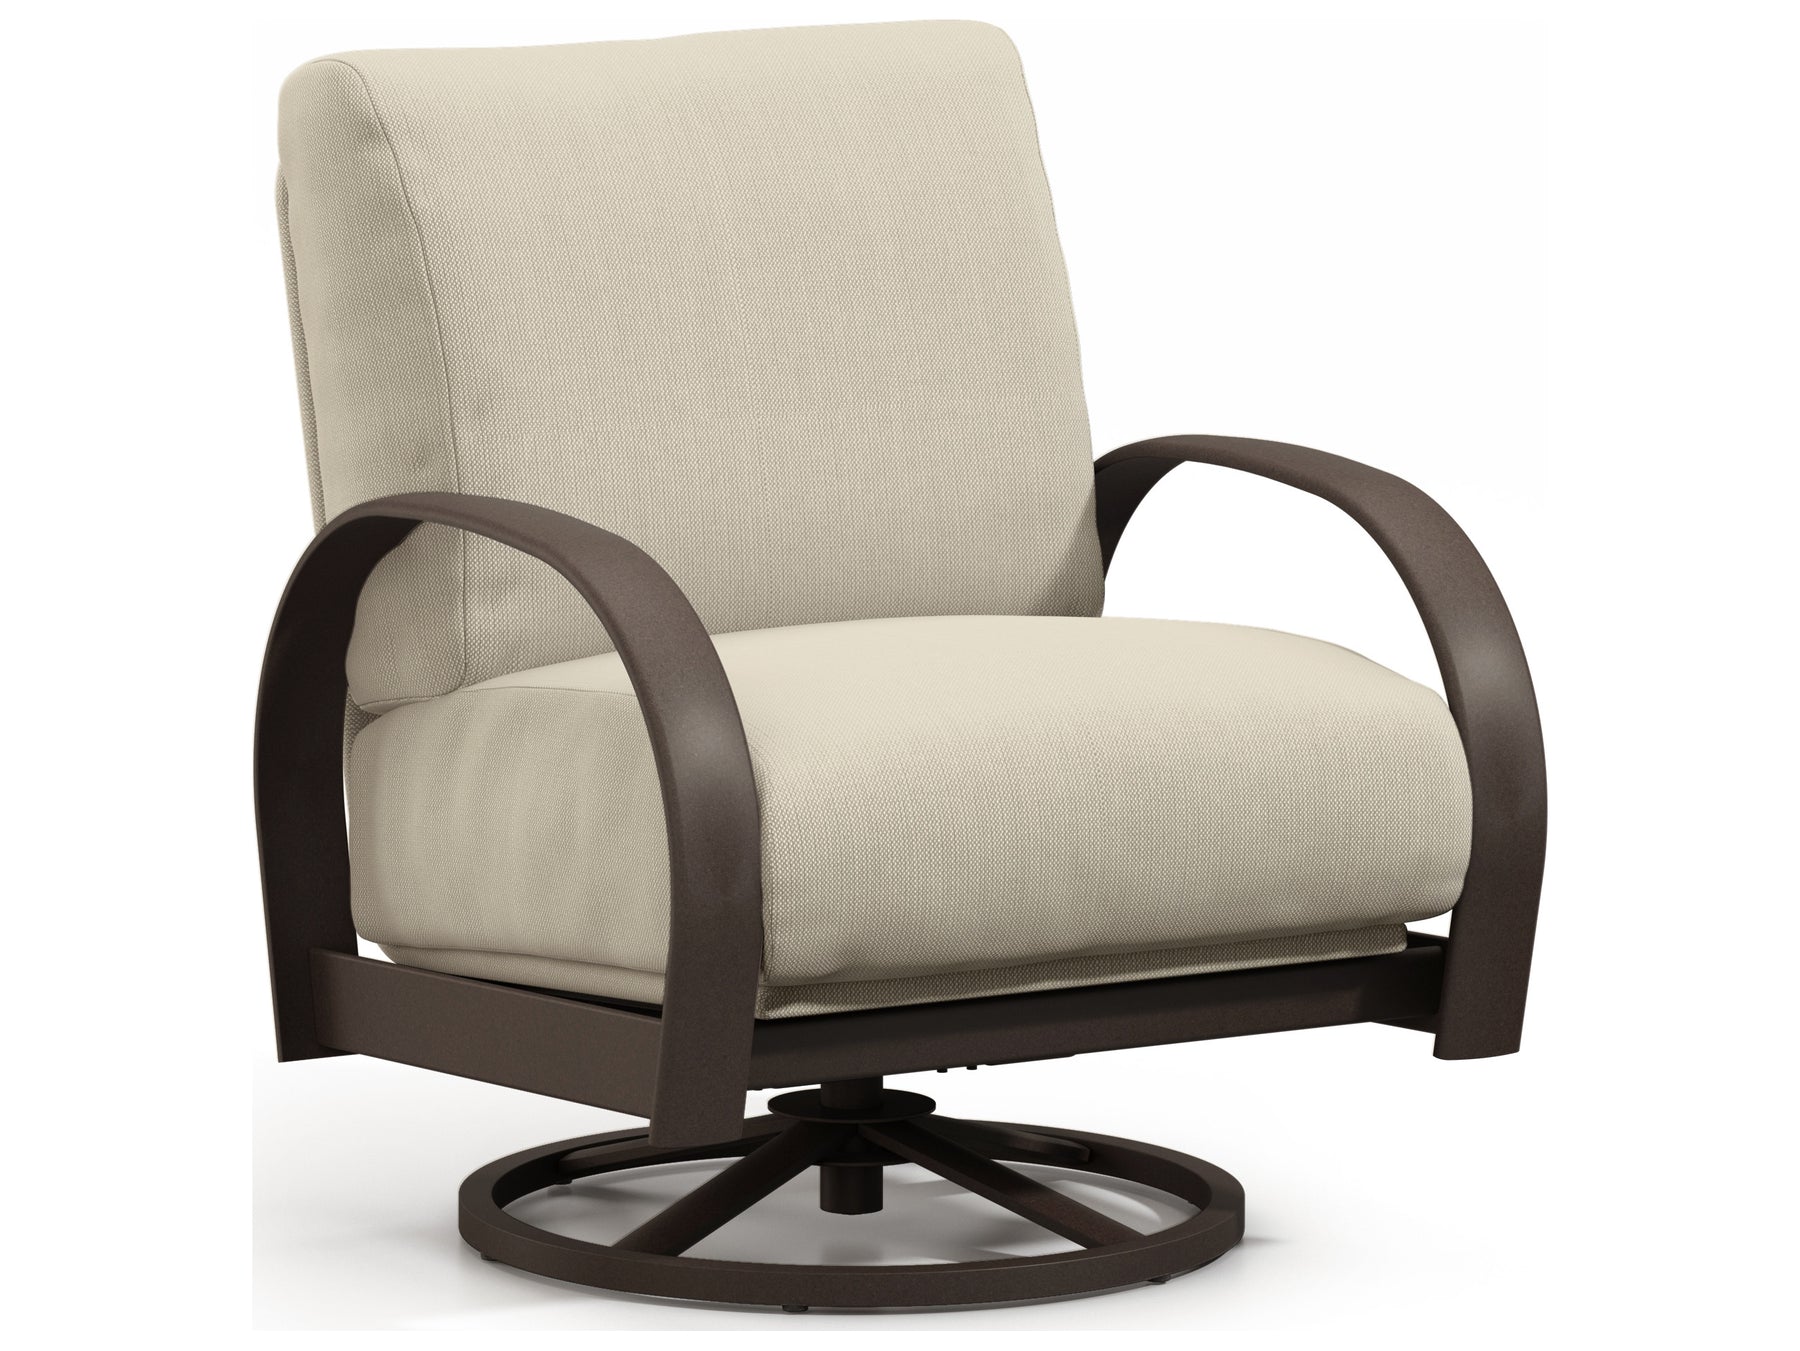 Homecrest Magneta Cushion Aluminum Swivel Rocker Lounge Chair